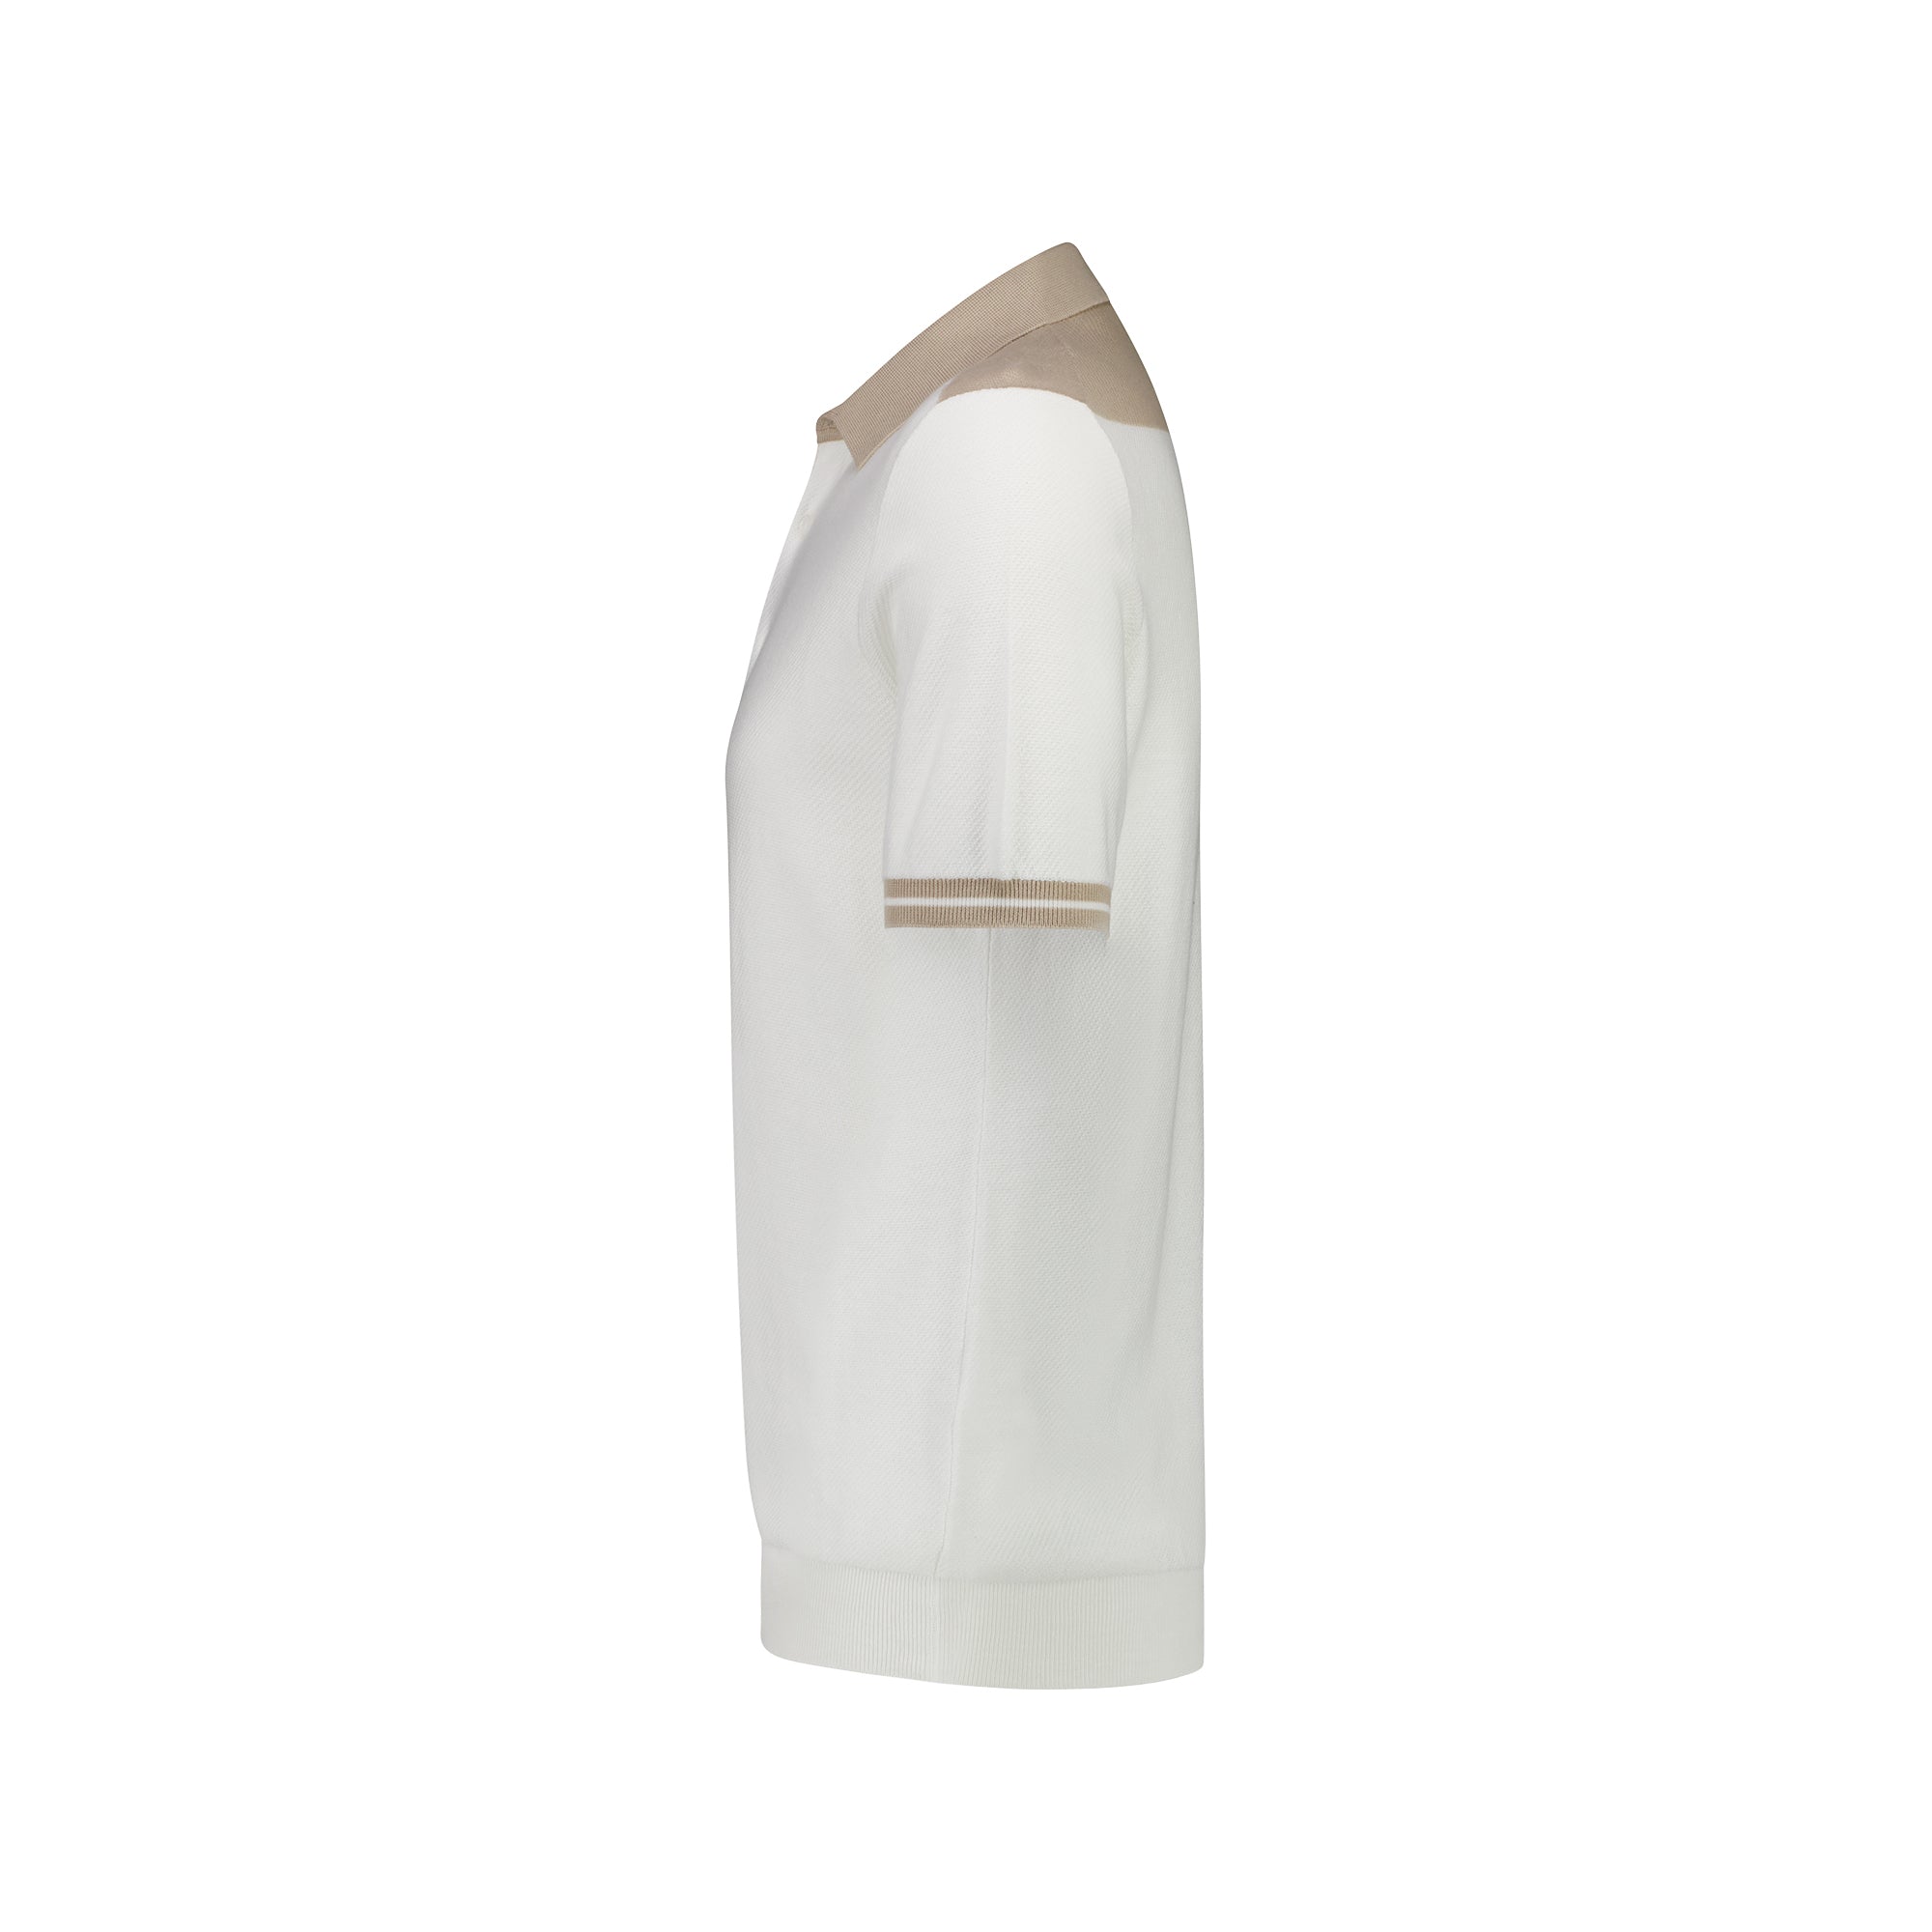 Ferrante Short Sleeve Contrast Polo in WHITE